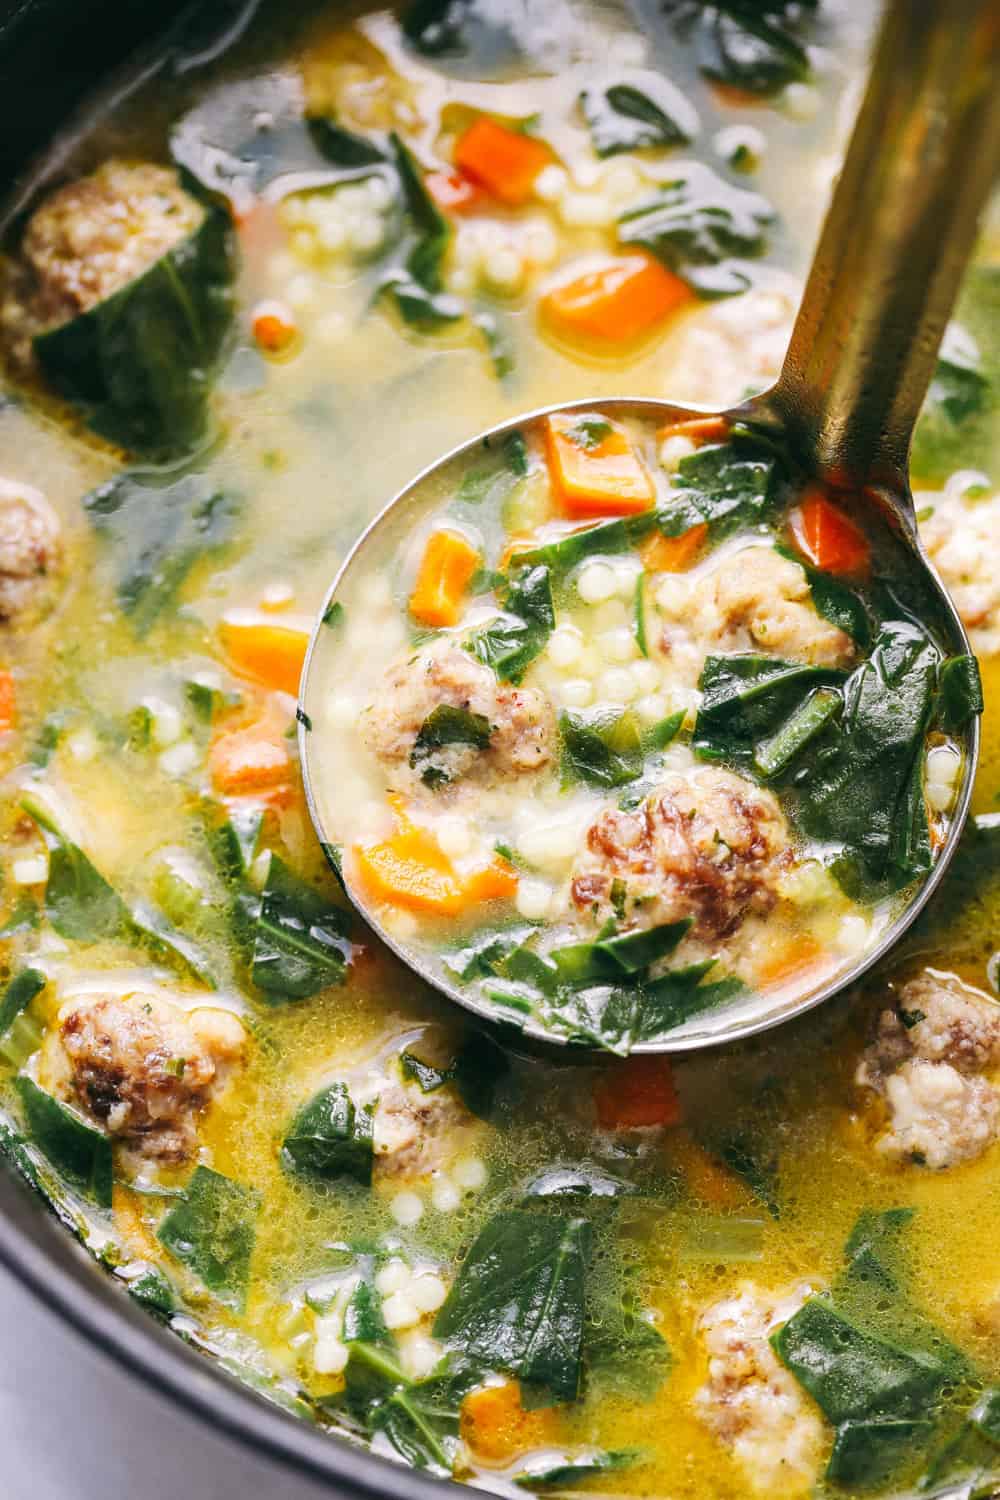 Classic Italian Wedding Soup Recipe